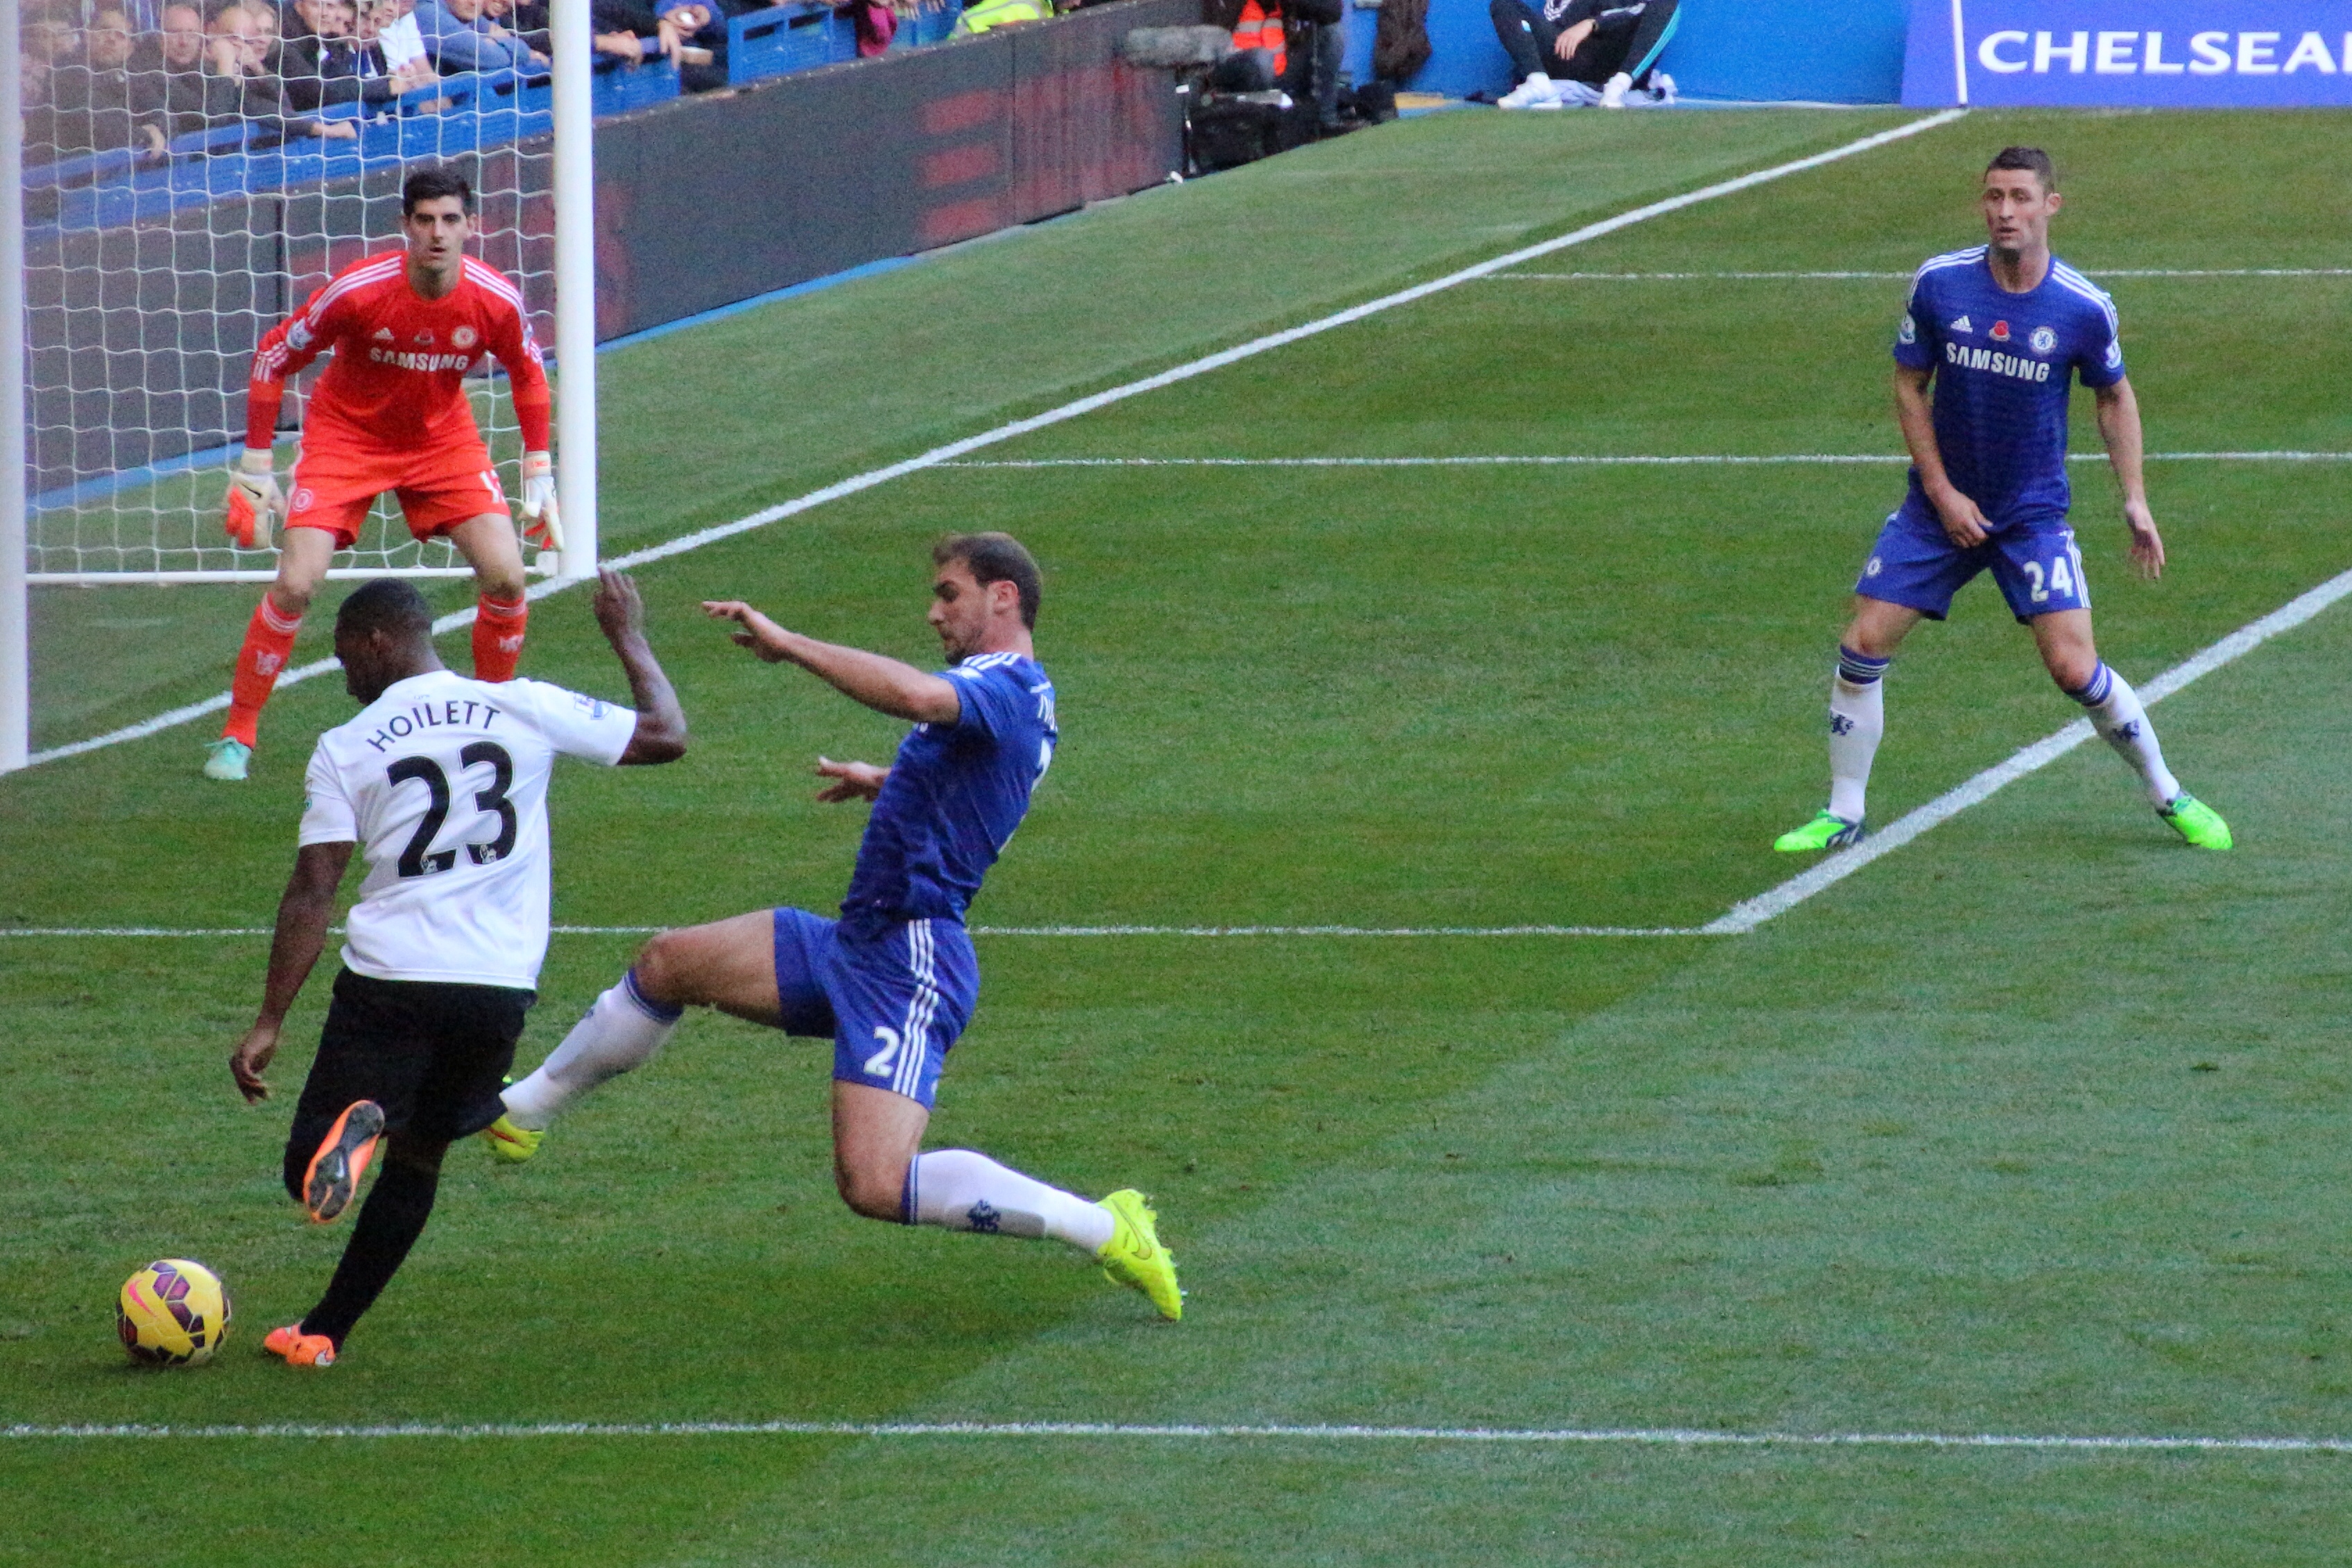 File:Chelsea Football Club, Stamford Bridge 12.jpg - Wikimedia Commons